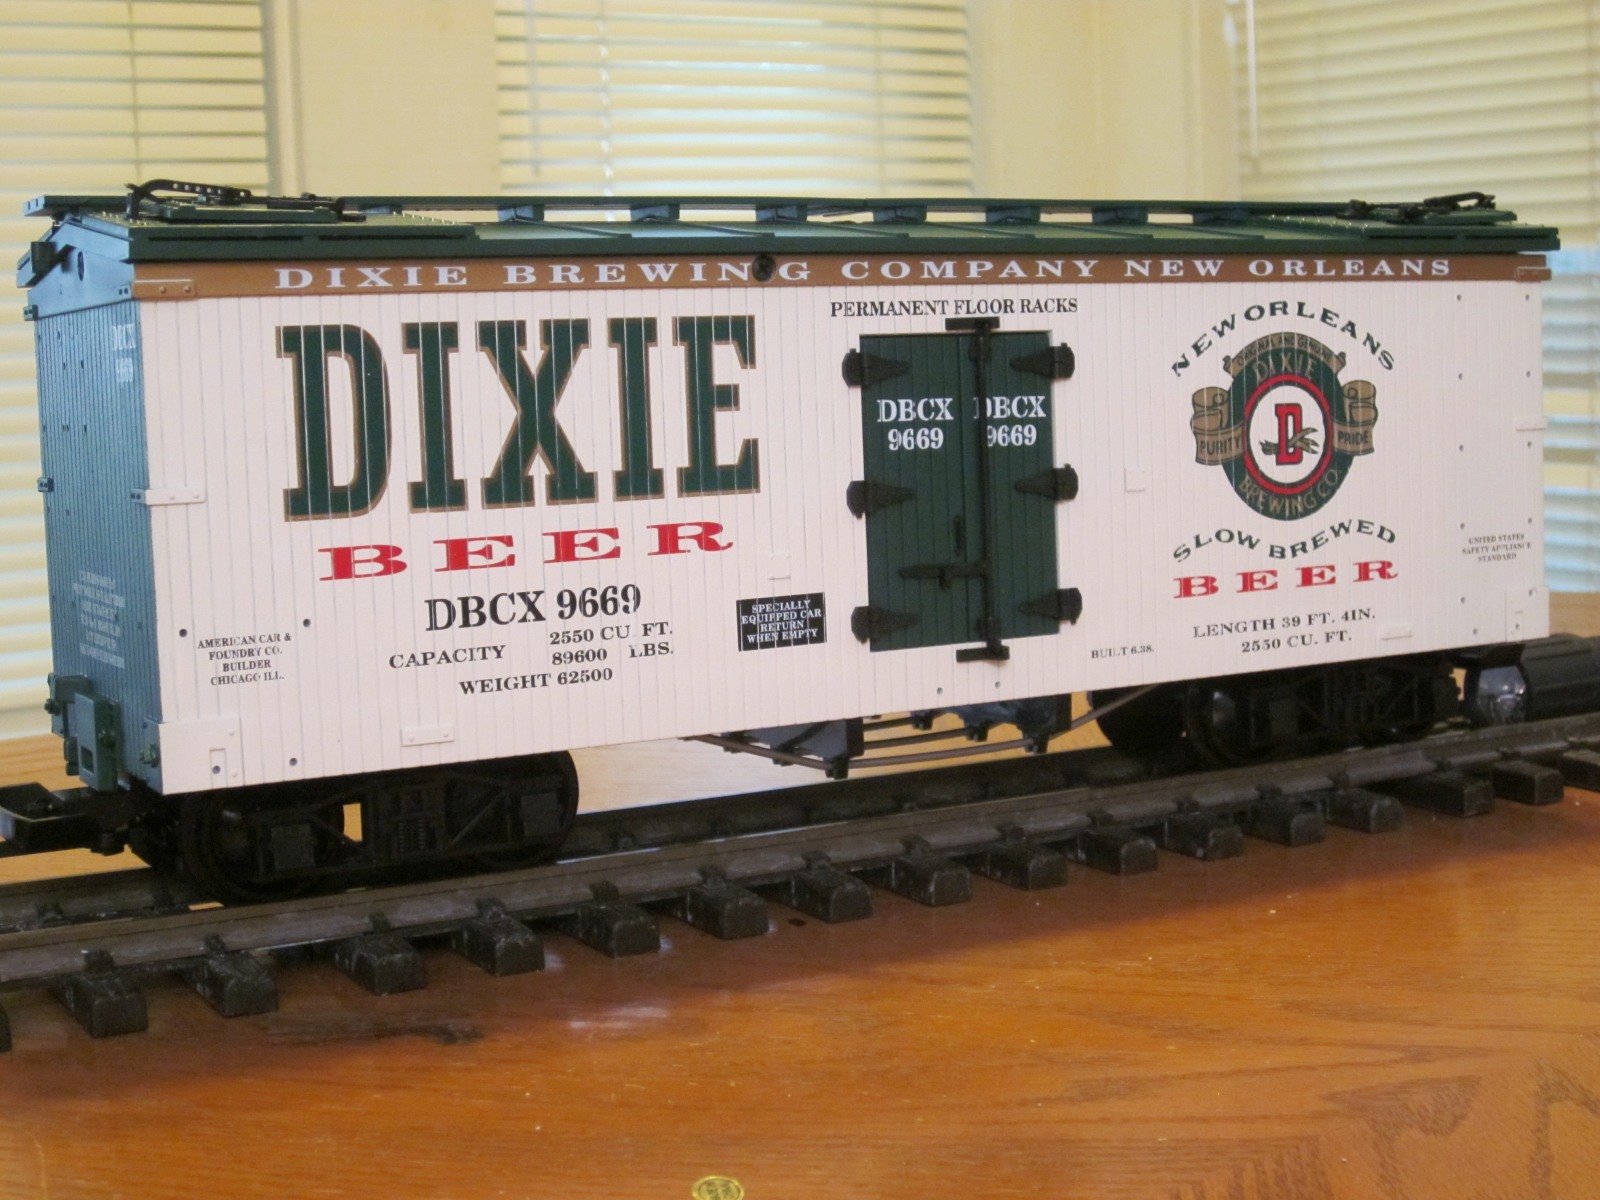 R16186 Dixie Beer DCBX 9669